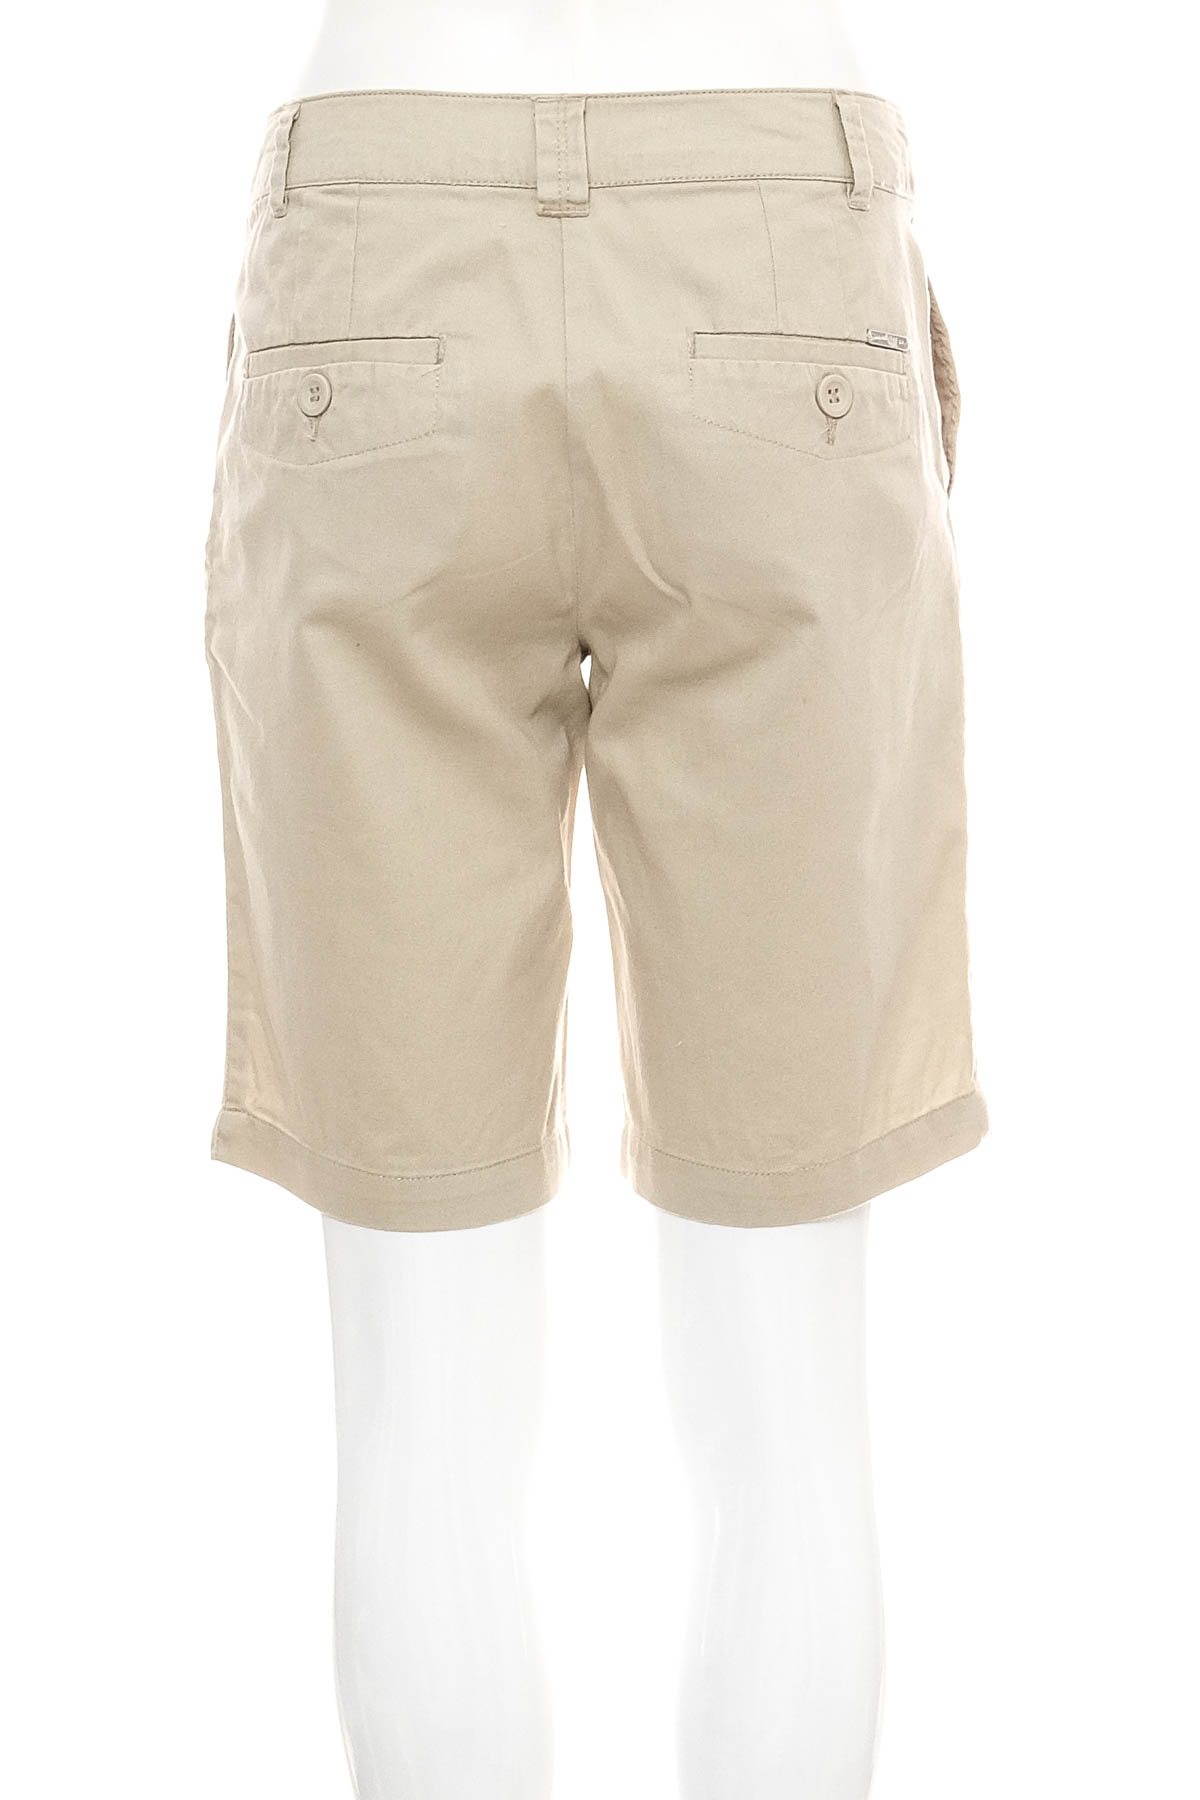 Female shorts - Colin's - 1